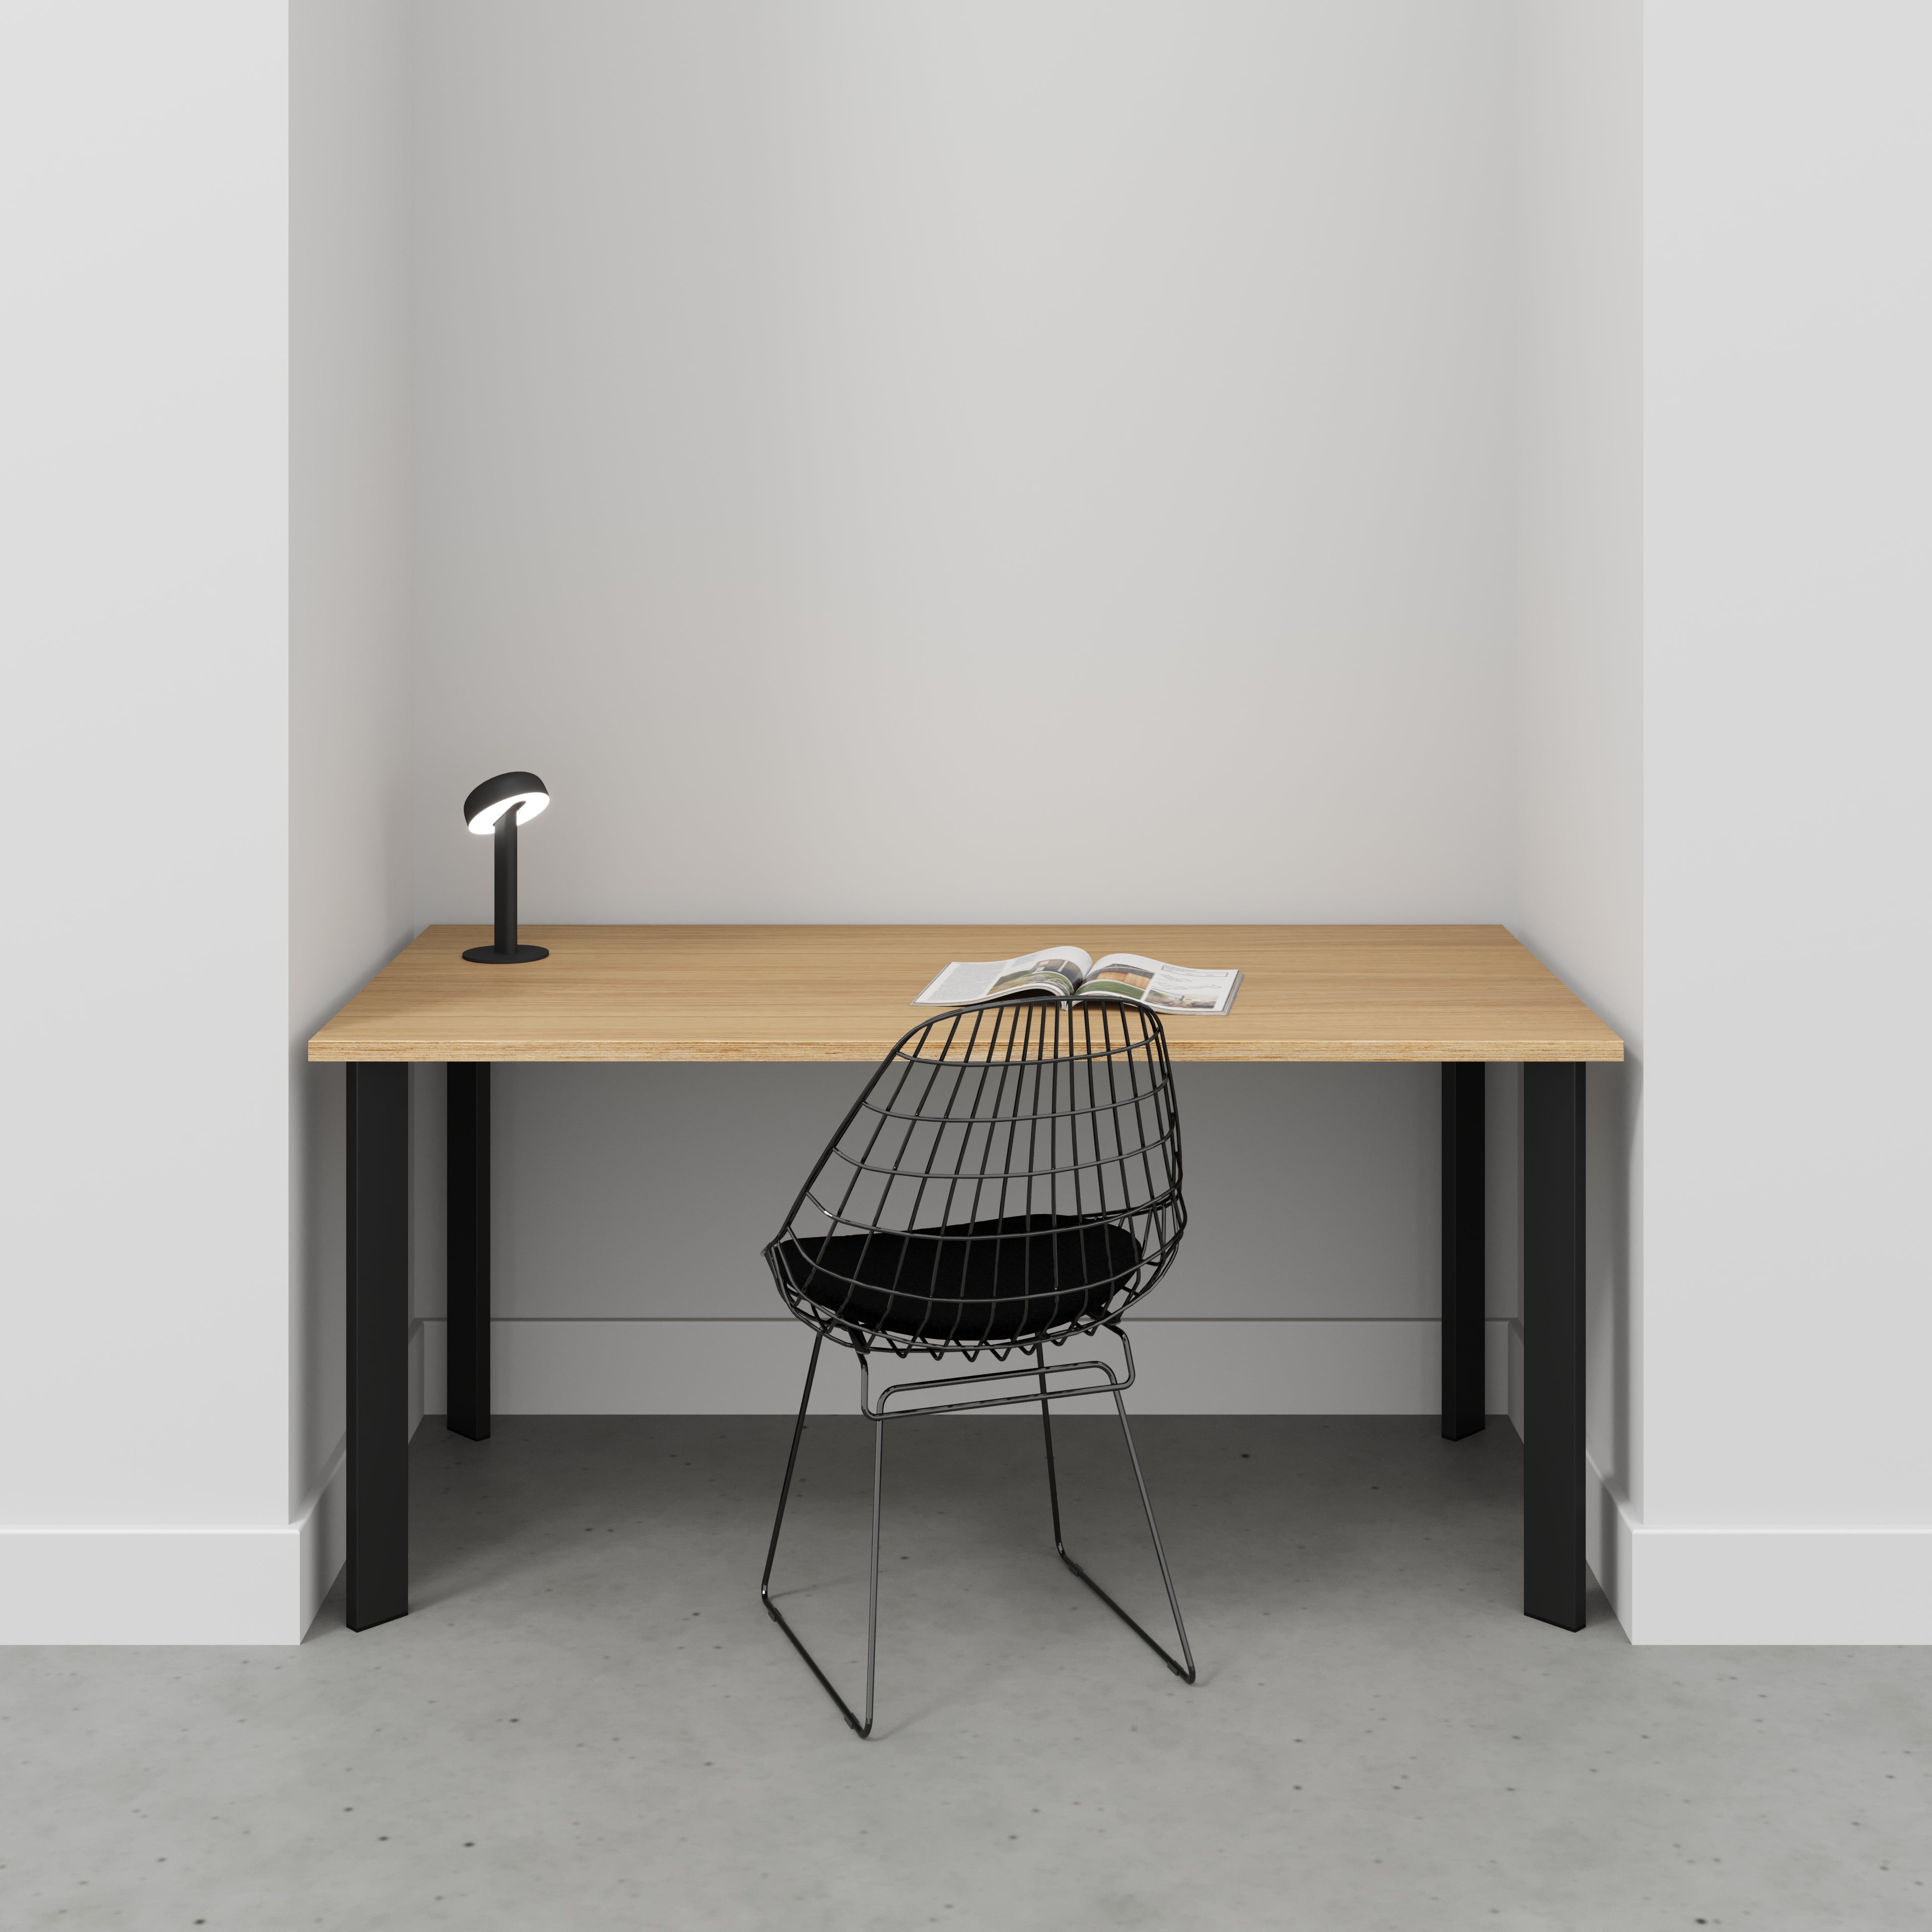 Desk with Black Rectangular Single Pin Legs - Plywood Oak - 1600(w) x 800(d) x 735(h)